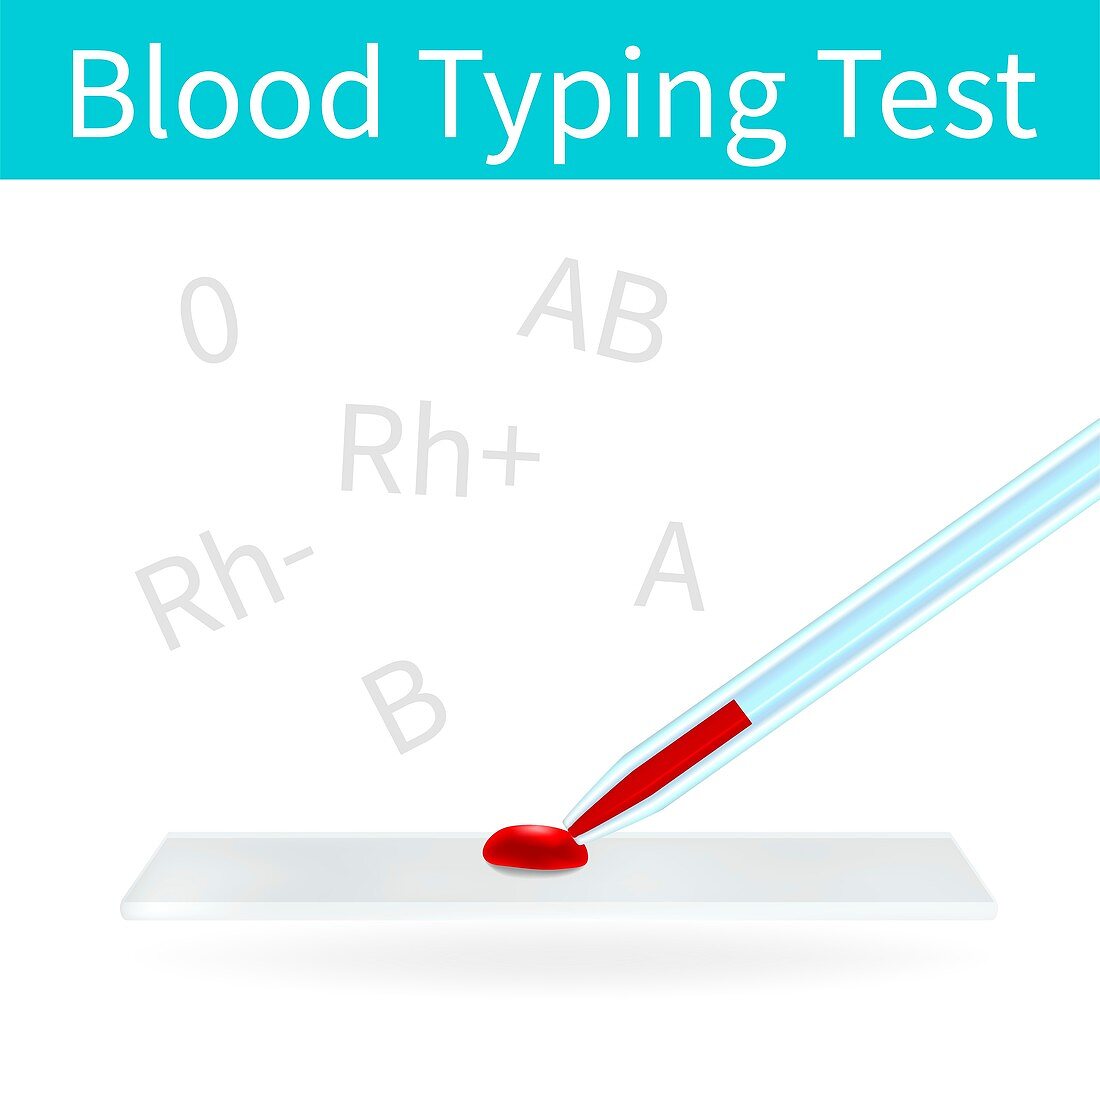 Blood typing test, illustration